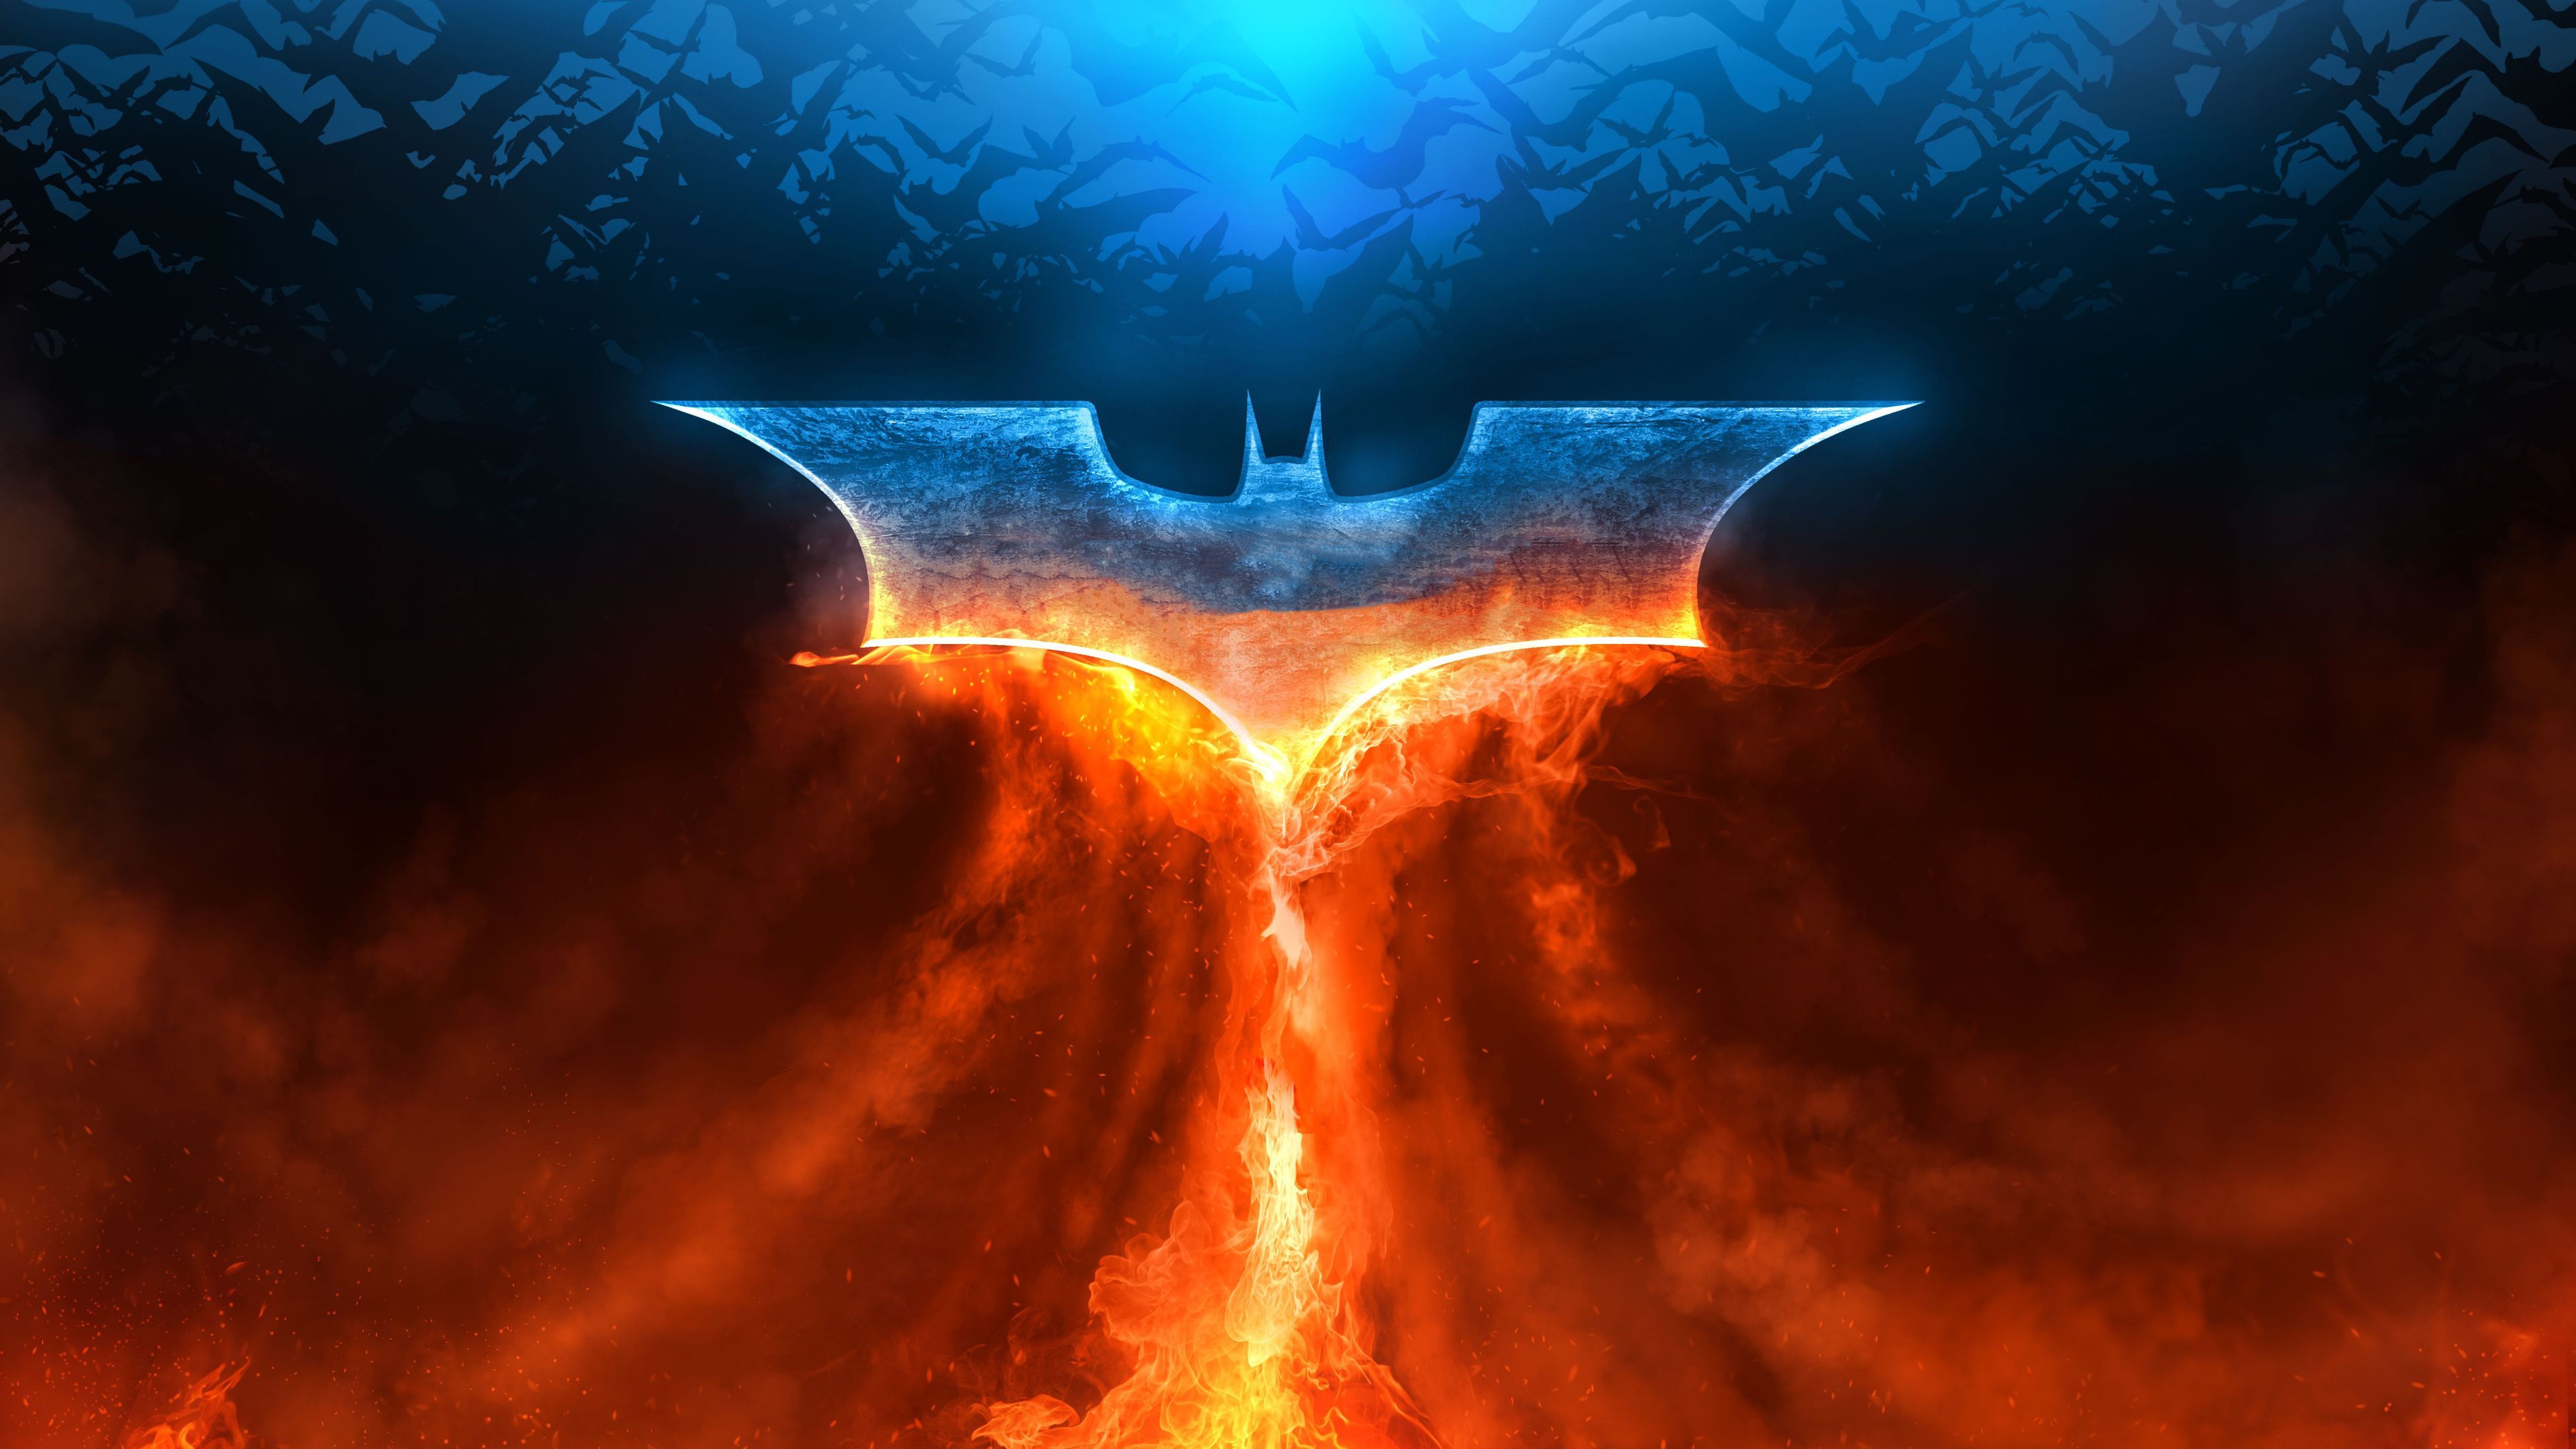 Batman Fire Rise Logo 4k superheroes wallpaper, logo wallpaper, hd- wallpaper, batman wallpaper, 5k wallpa. Batman wallpaper, Creative graphics, Batman artwork